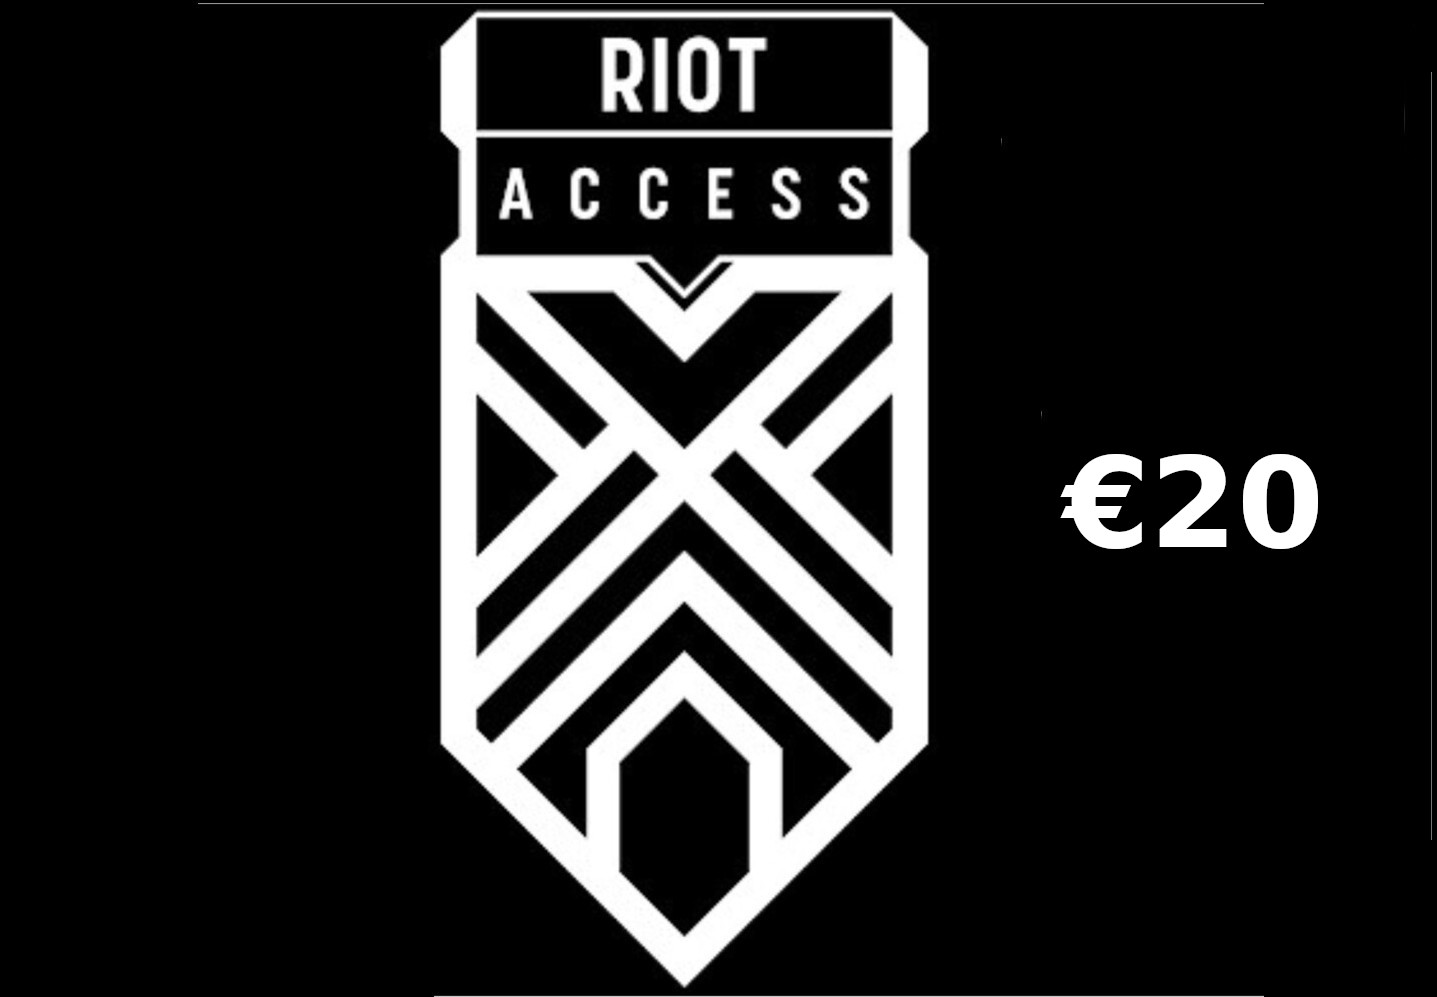 Riot Access €20 Code EU